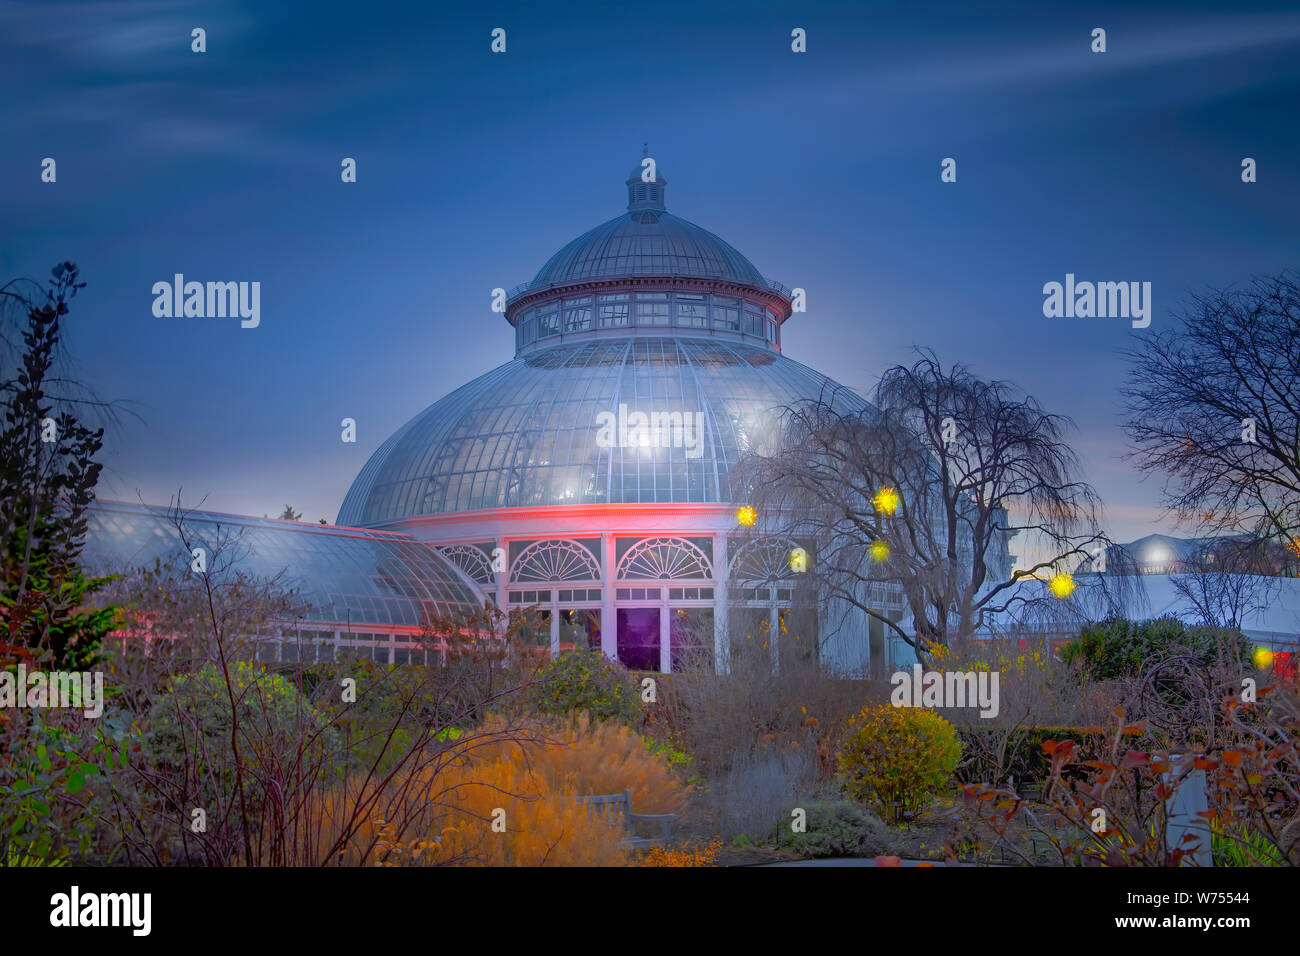 The New York Botanical Garden transforms into a winter wonderland during the Holiday Season. Stock Photo